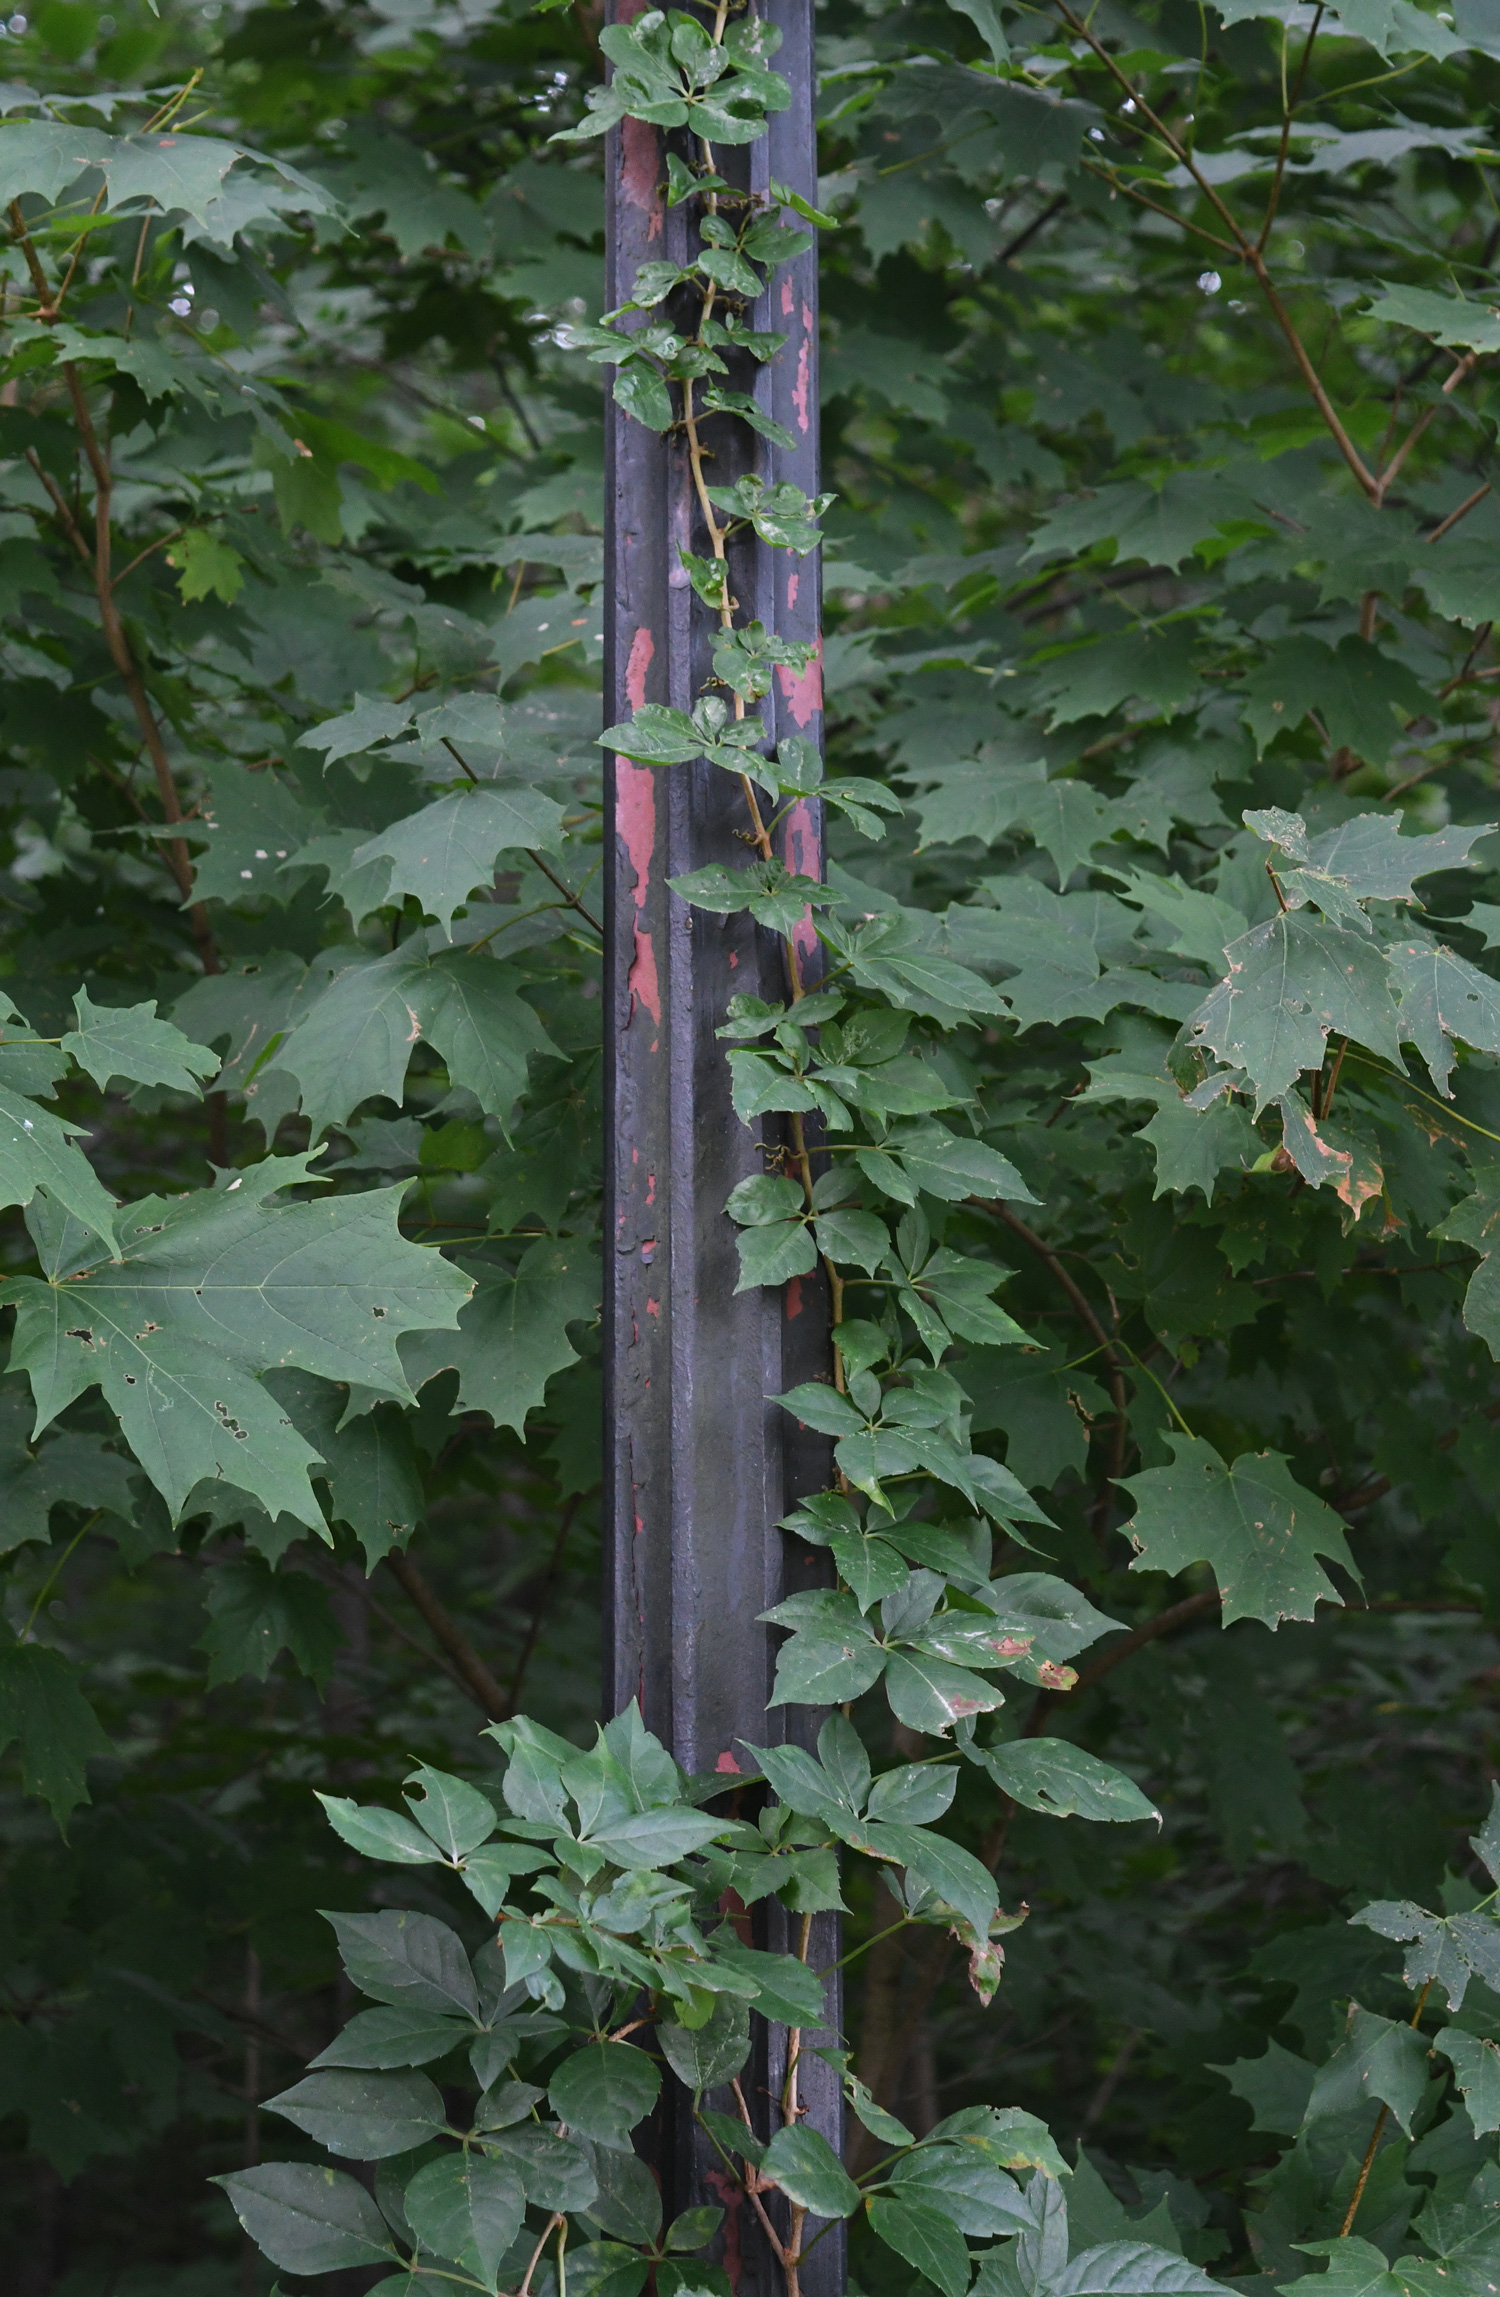 Ivy on lamppost, Prospect Park